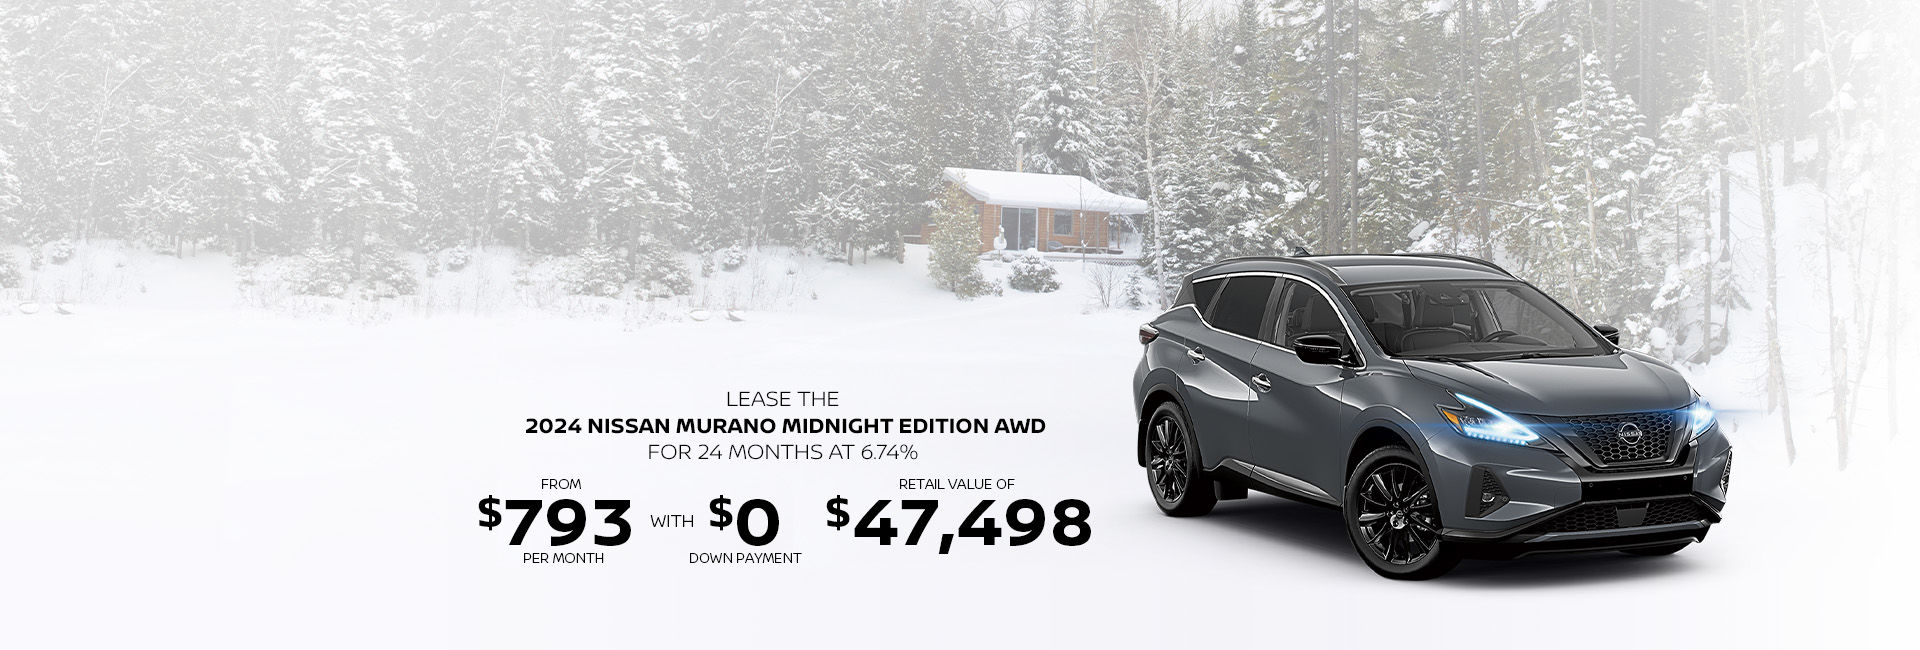 The 2024 Murano Midnight Edition AWD